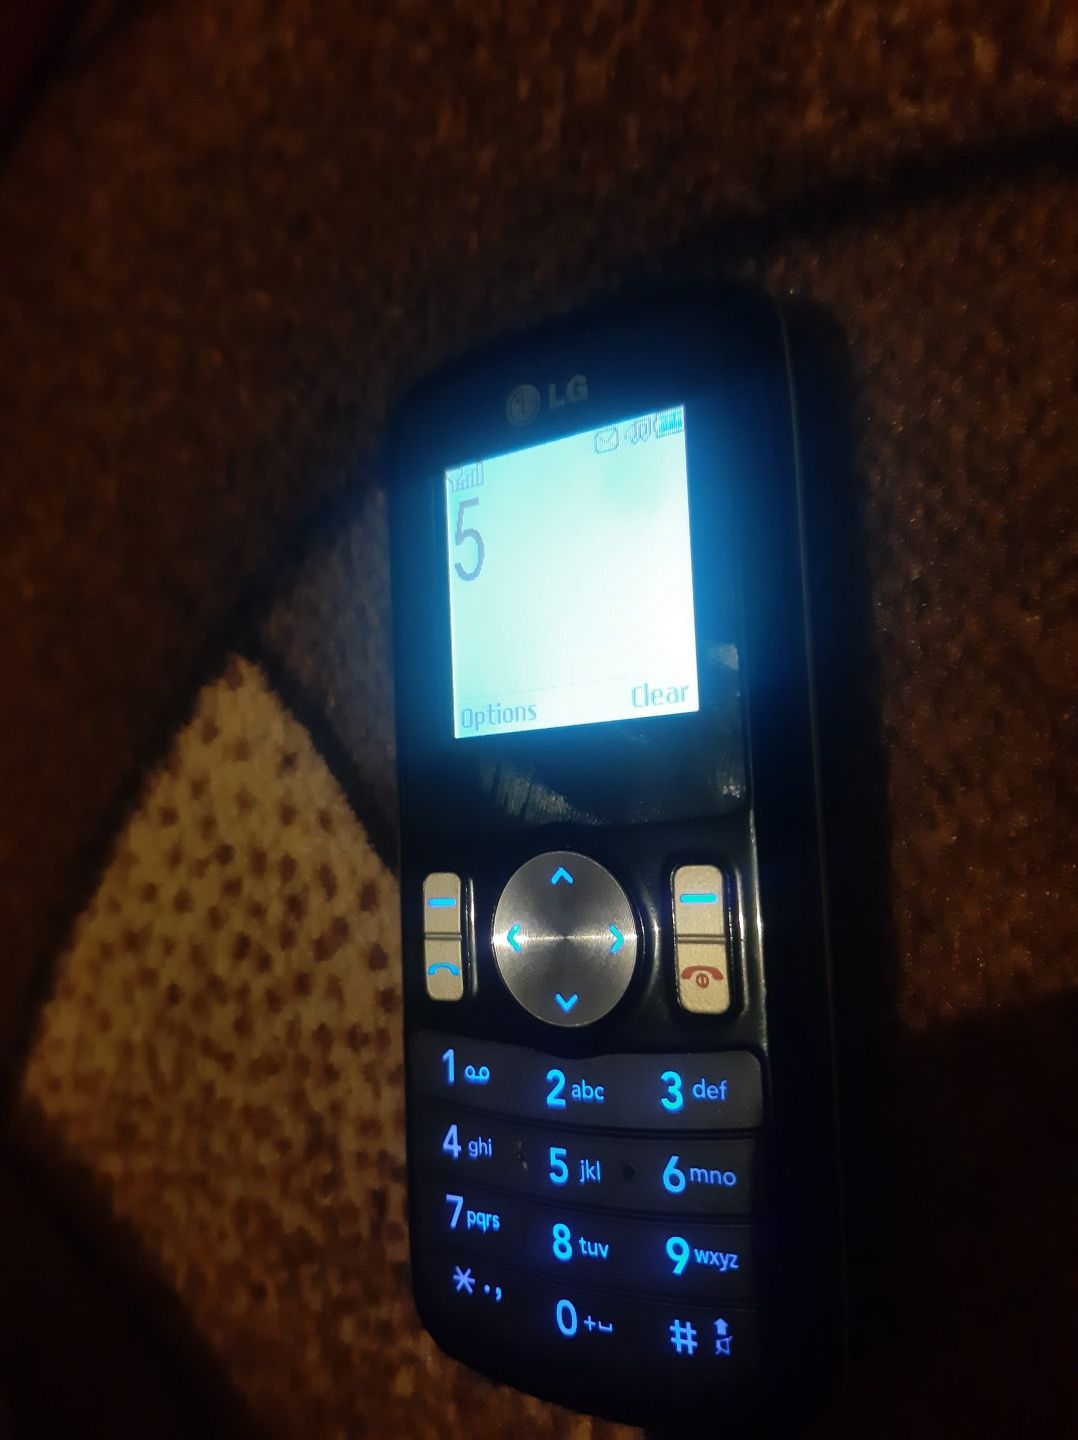 Телефон: LG GB102 \ Nokia 1209